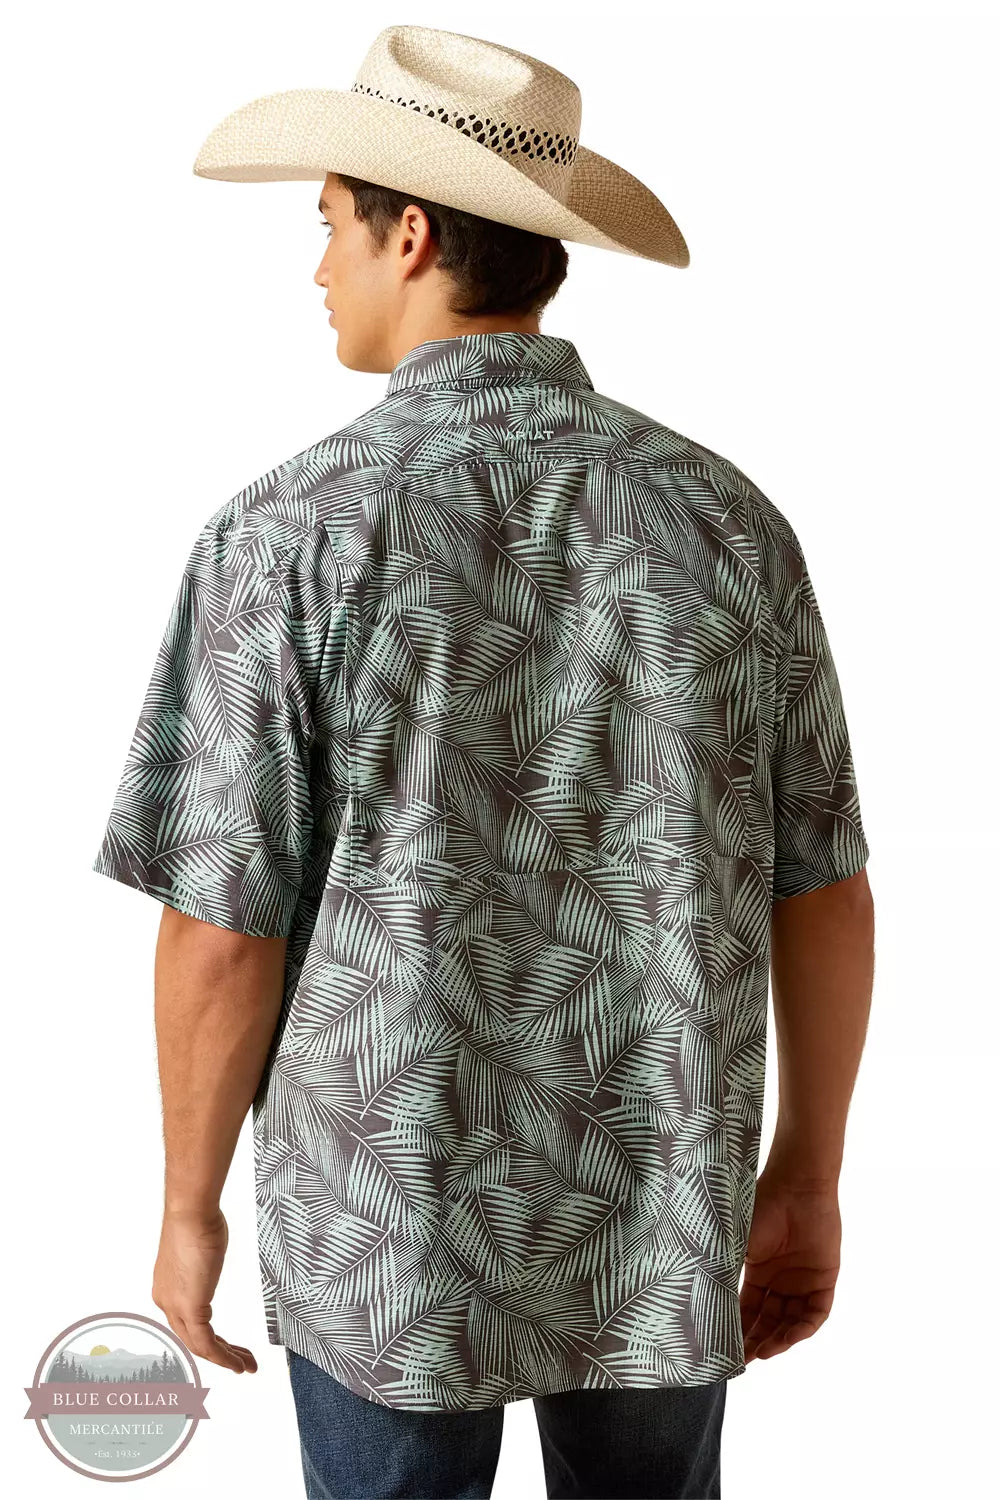 Ariat 10048847 VentTEK Classic Fit Shirt in Ebony Grey Back View